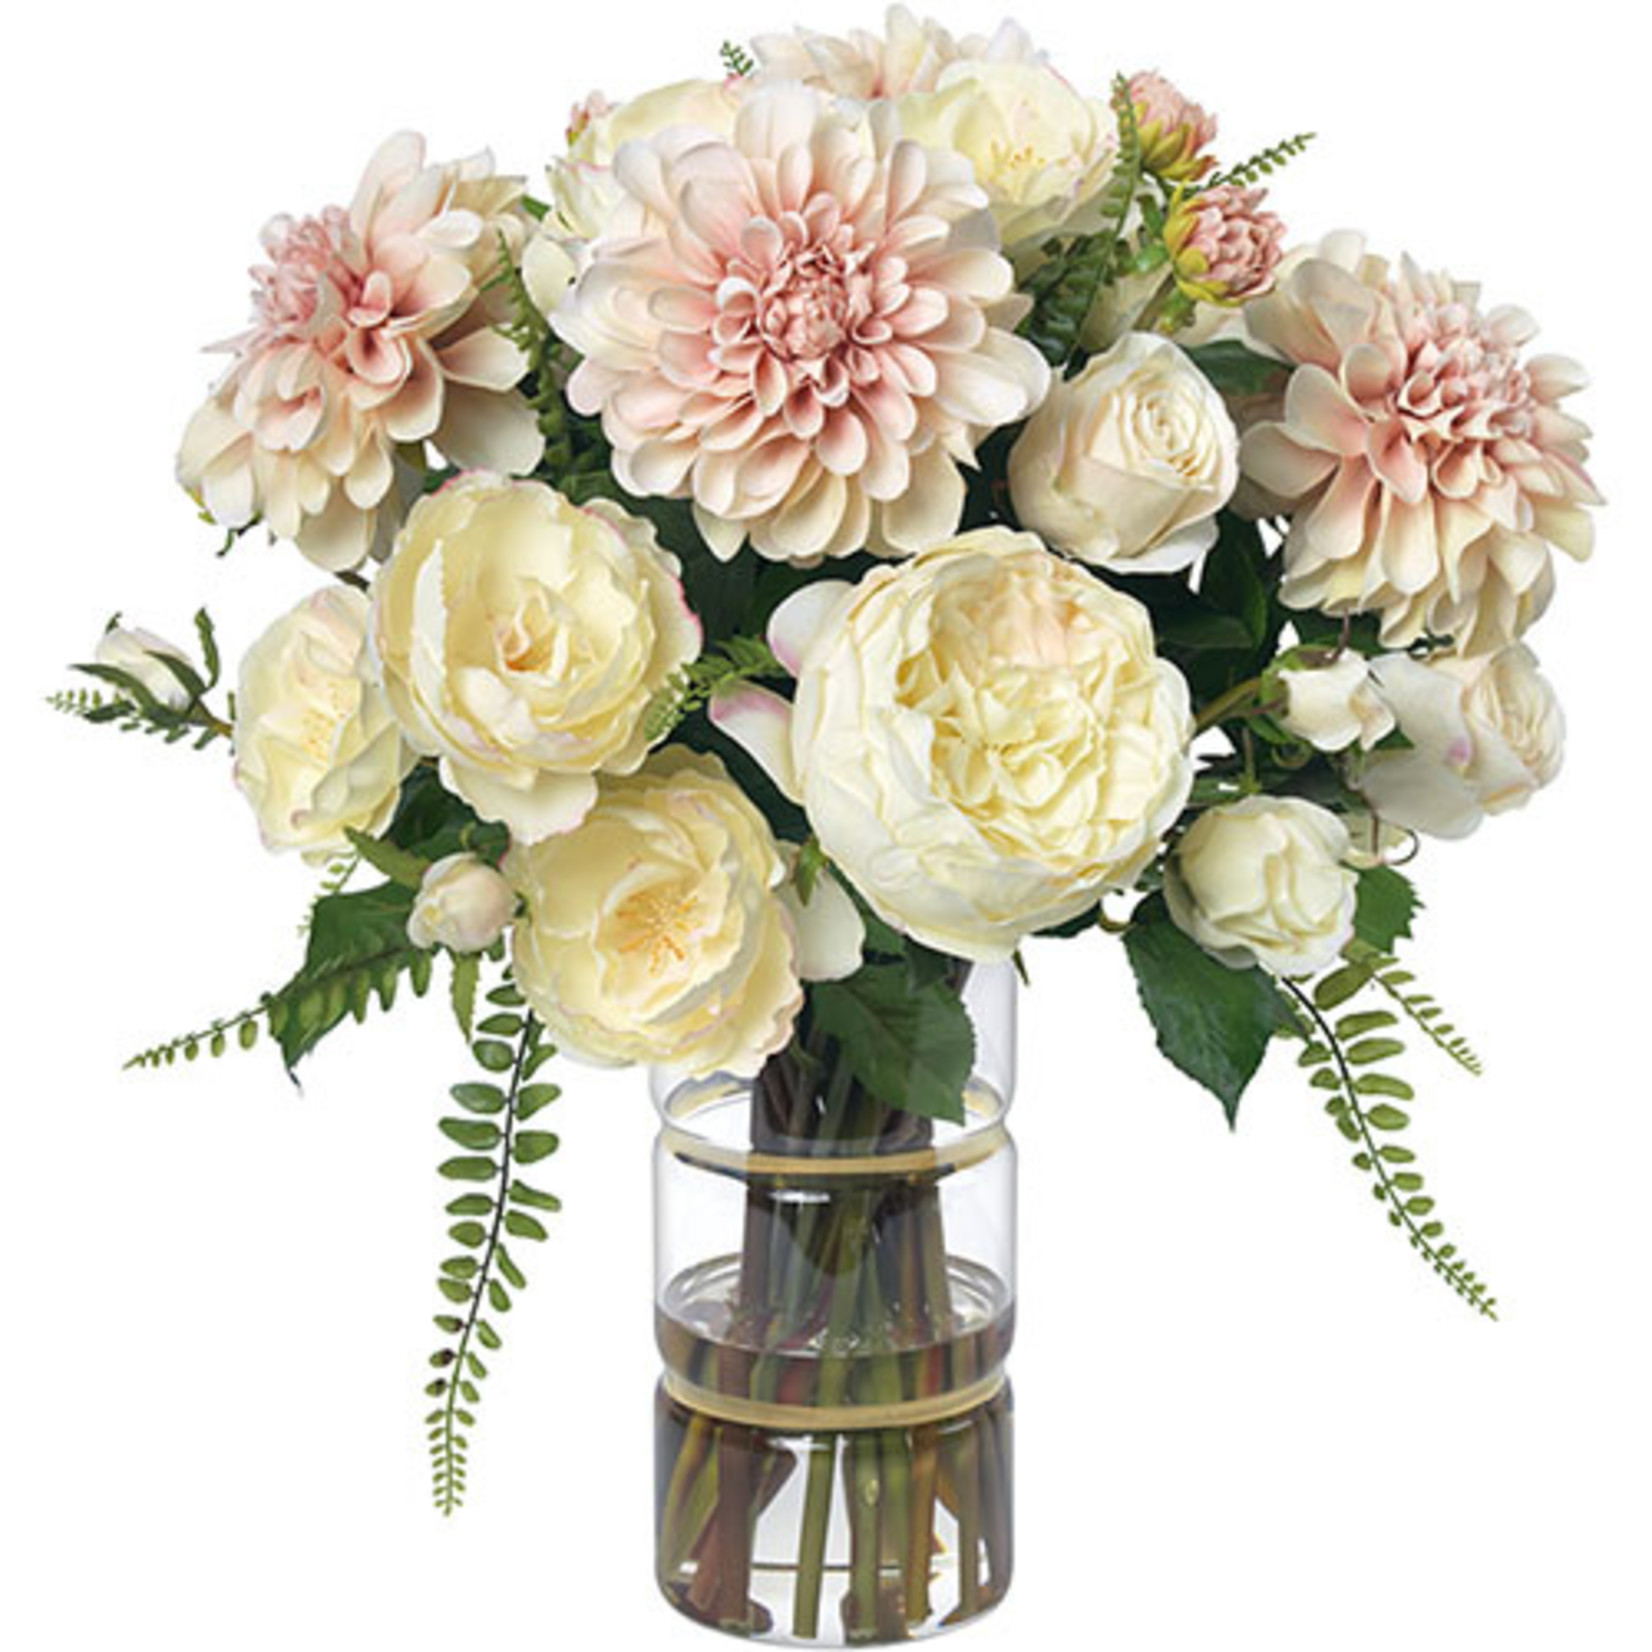 Floral Cream Rose & Pink Dahila Bouquet In Glass Vase